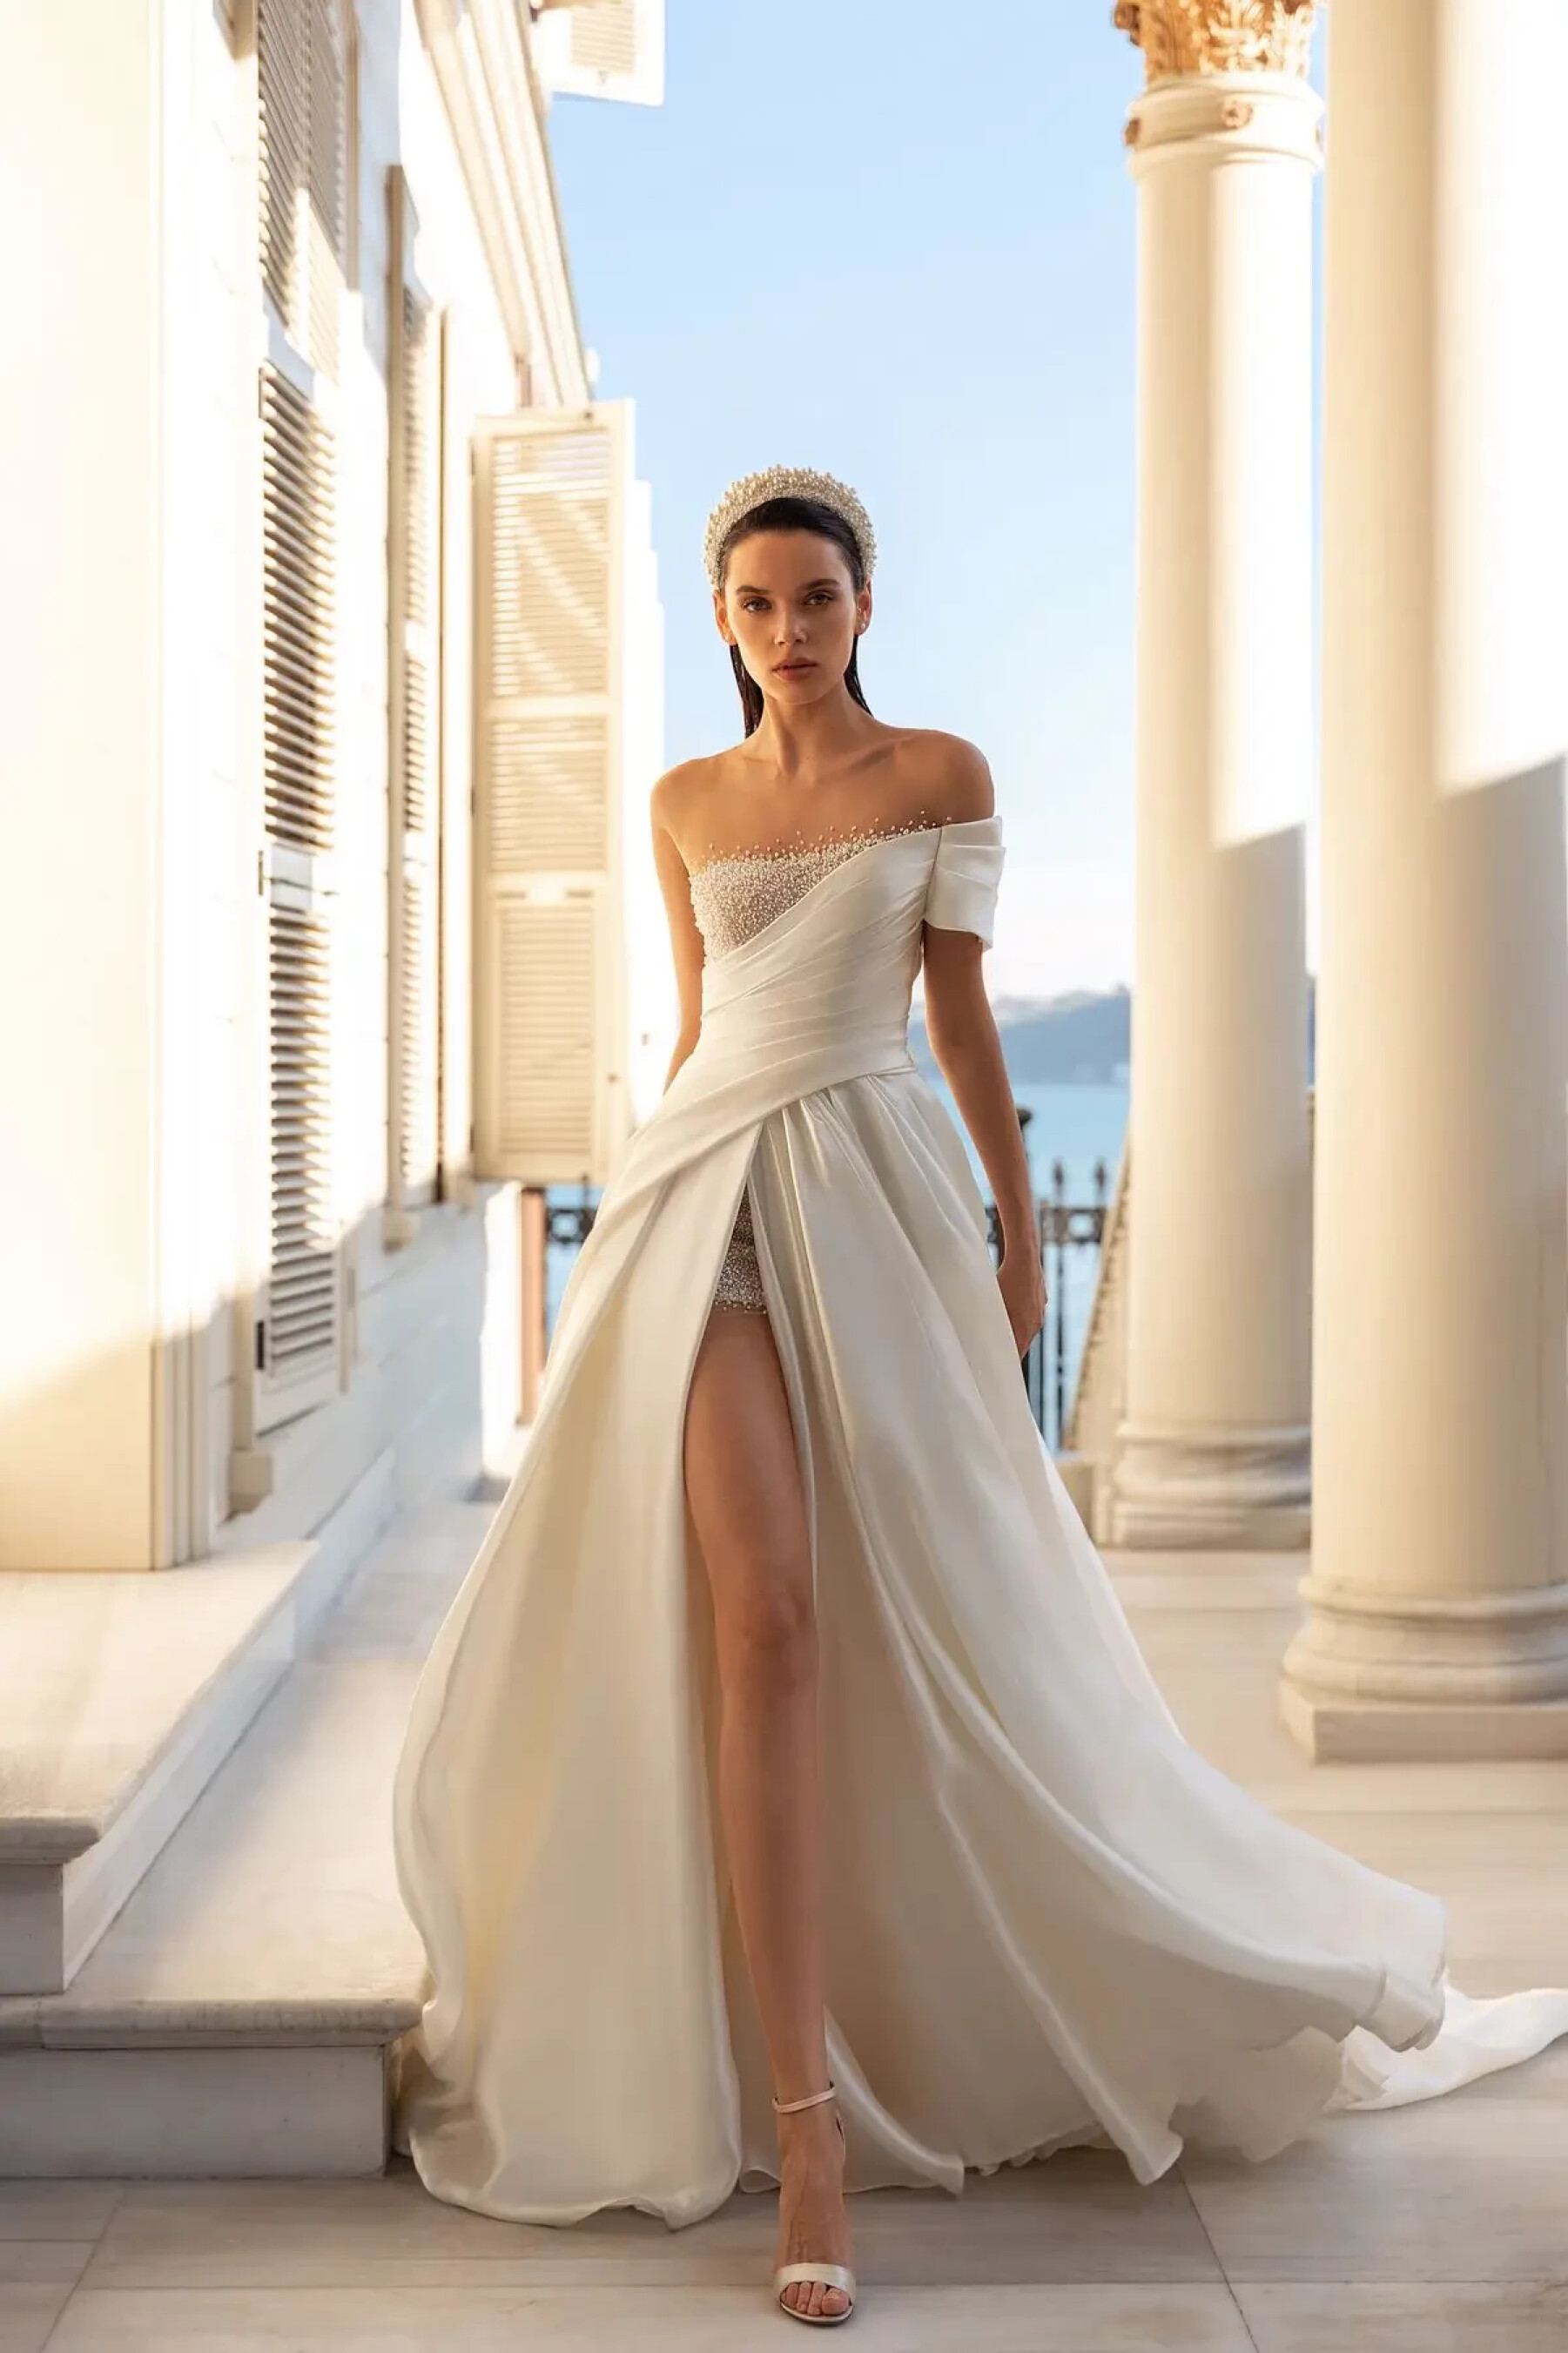 White Beige Lace Wedding Dress FEELING OF PASSION by BRAVE GLANCE, Ida  Torez, Pollardi